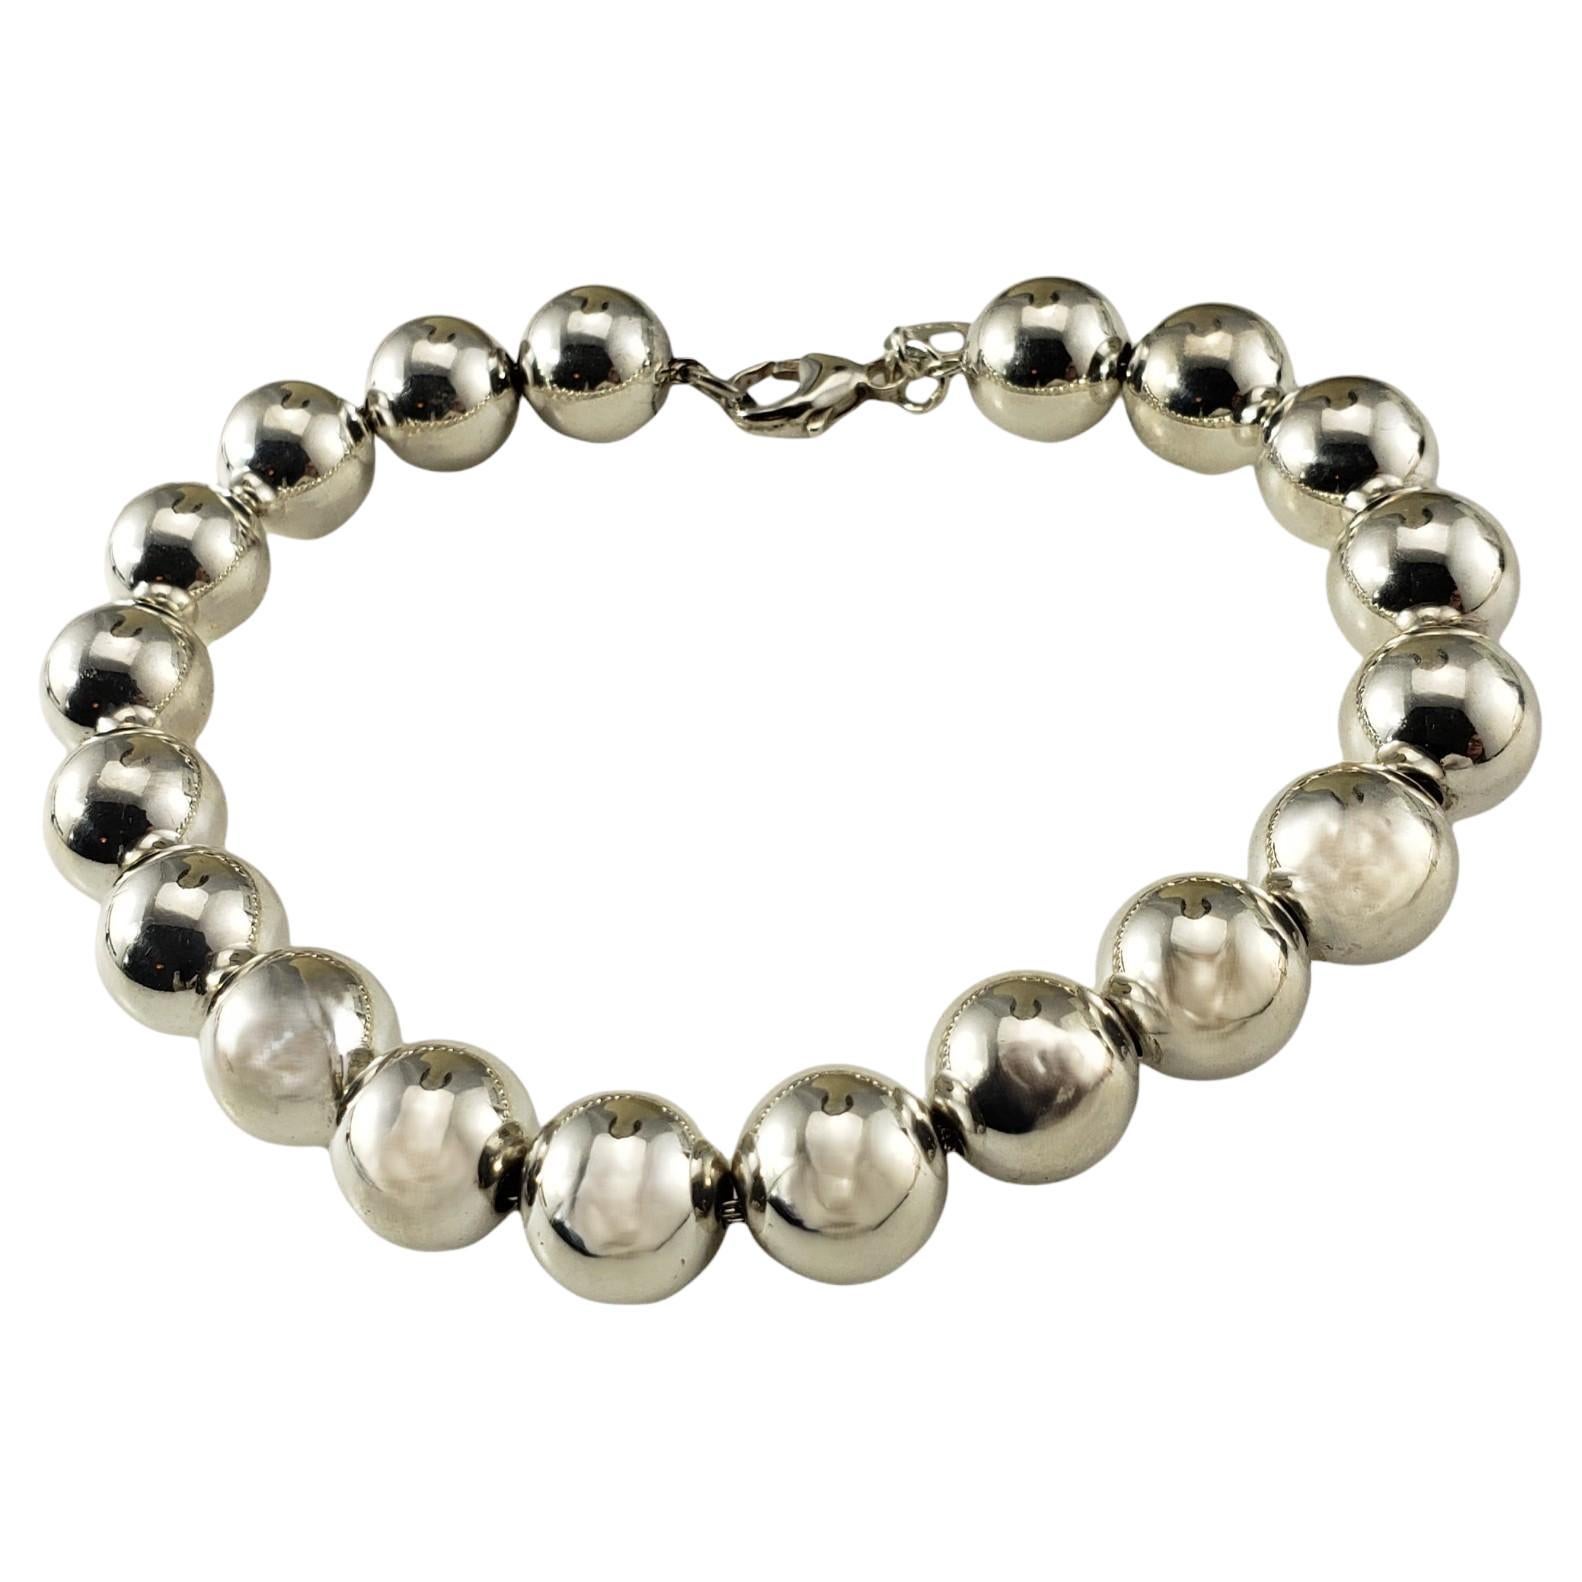 Tiffany & Co. Sterling Silver Ball Bracelet #17162 For Sale